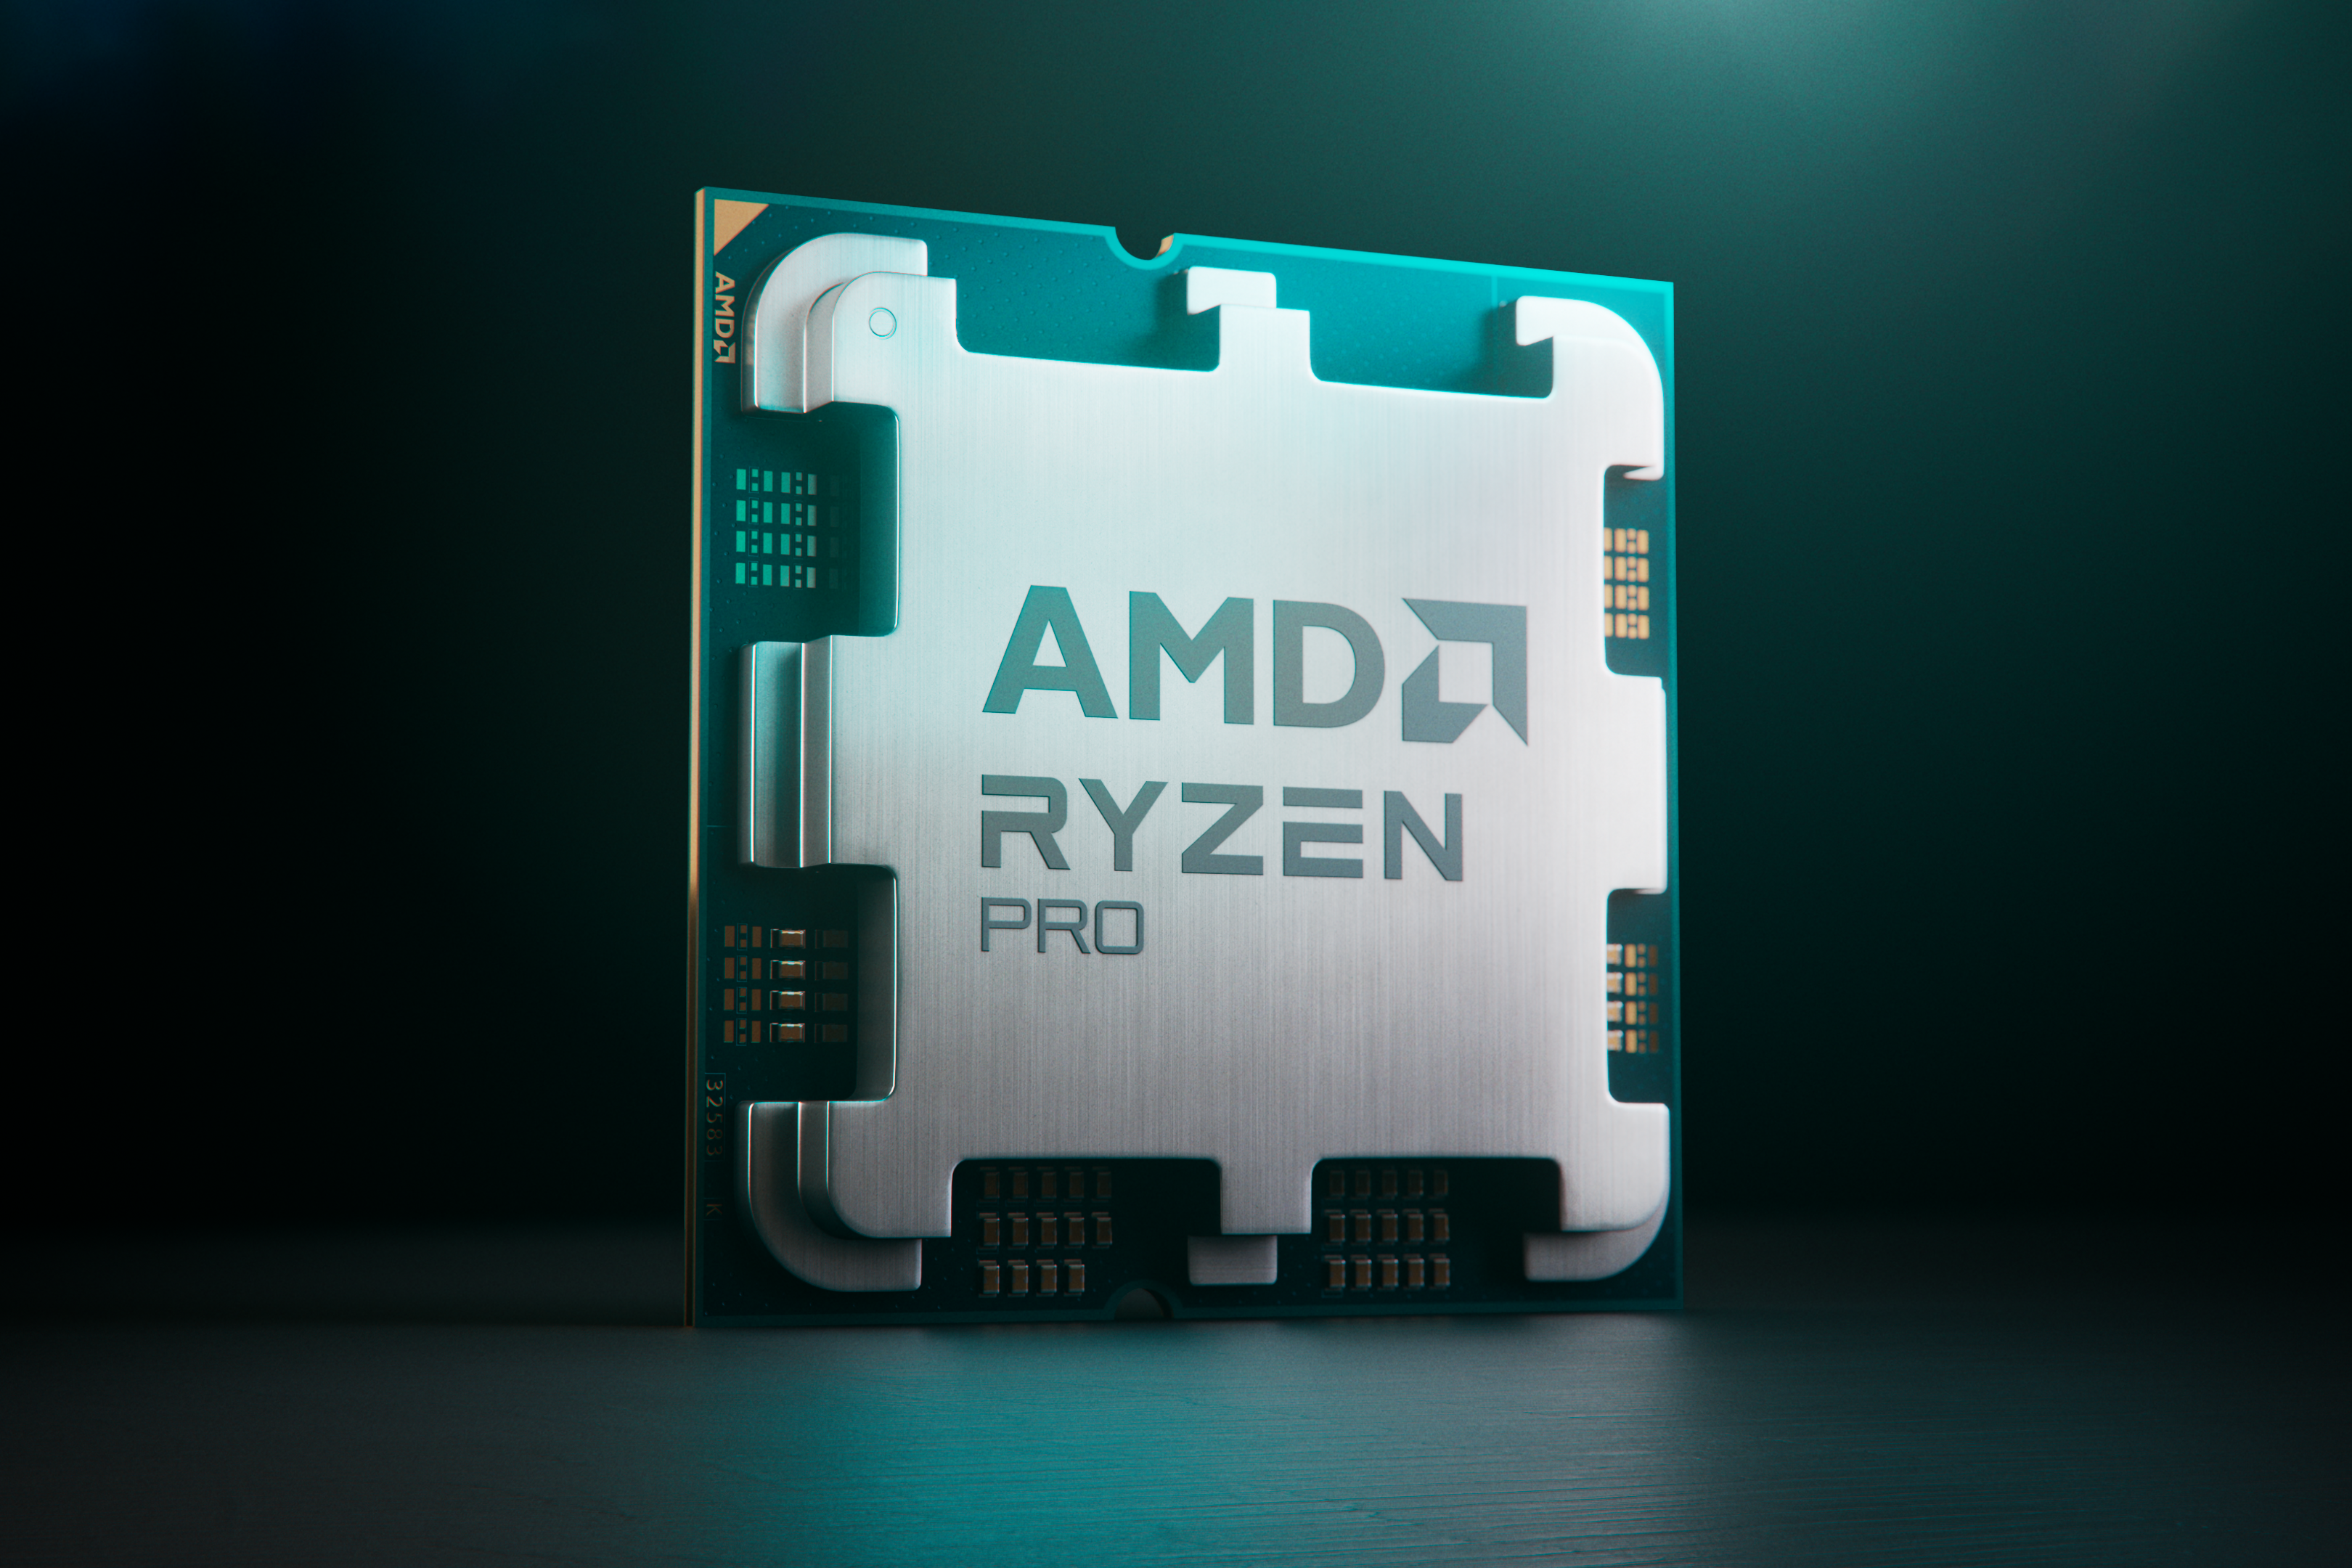 AMD's new Ryzen Pro processors bring AI to laptops and desktops